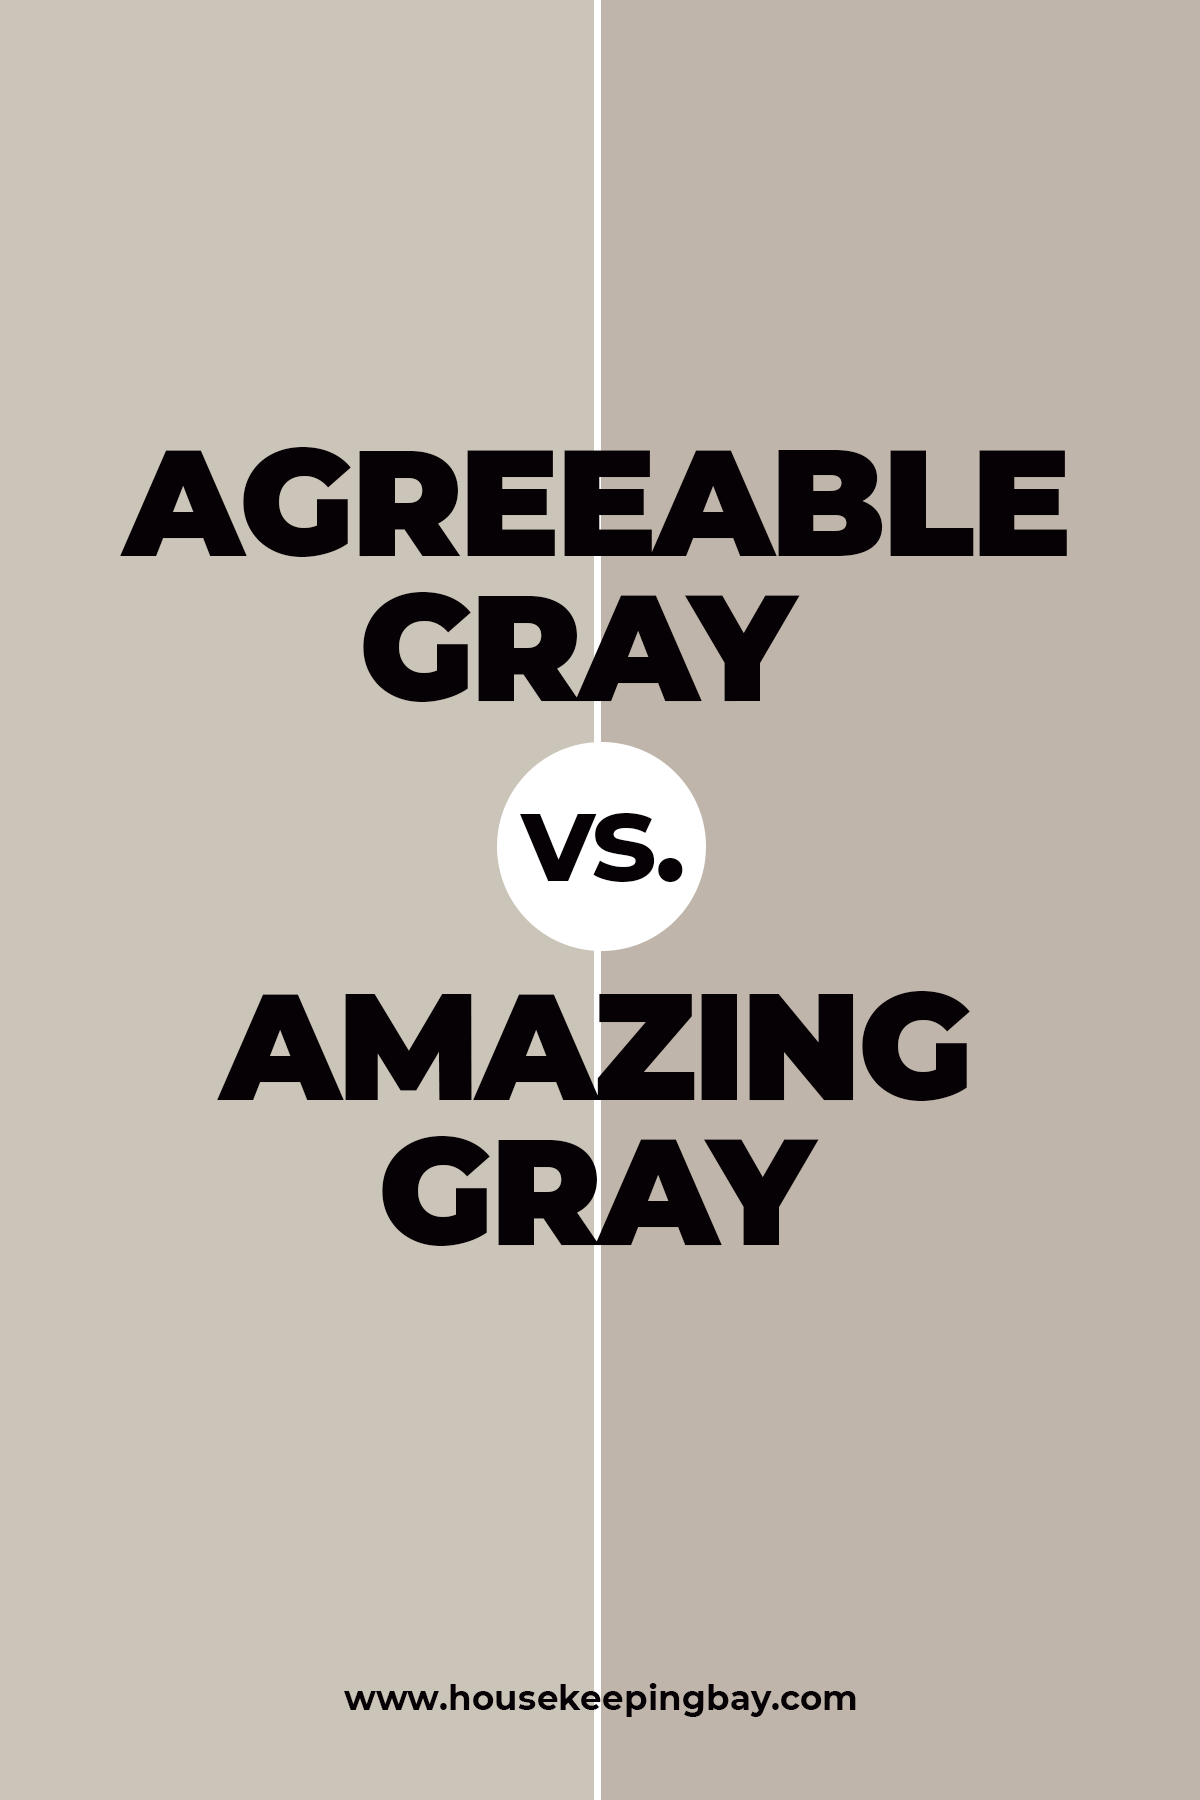 Agreeable Gray vs Amazing Gray